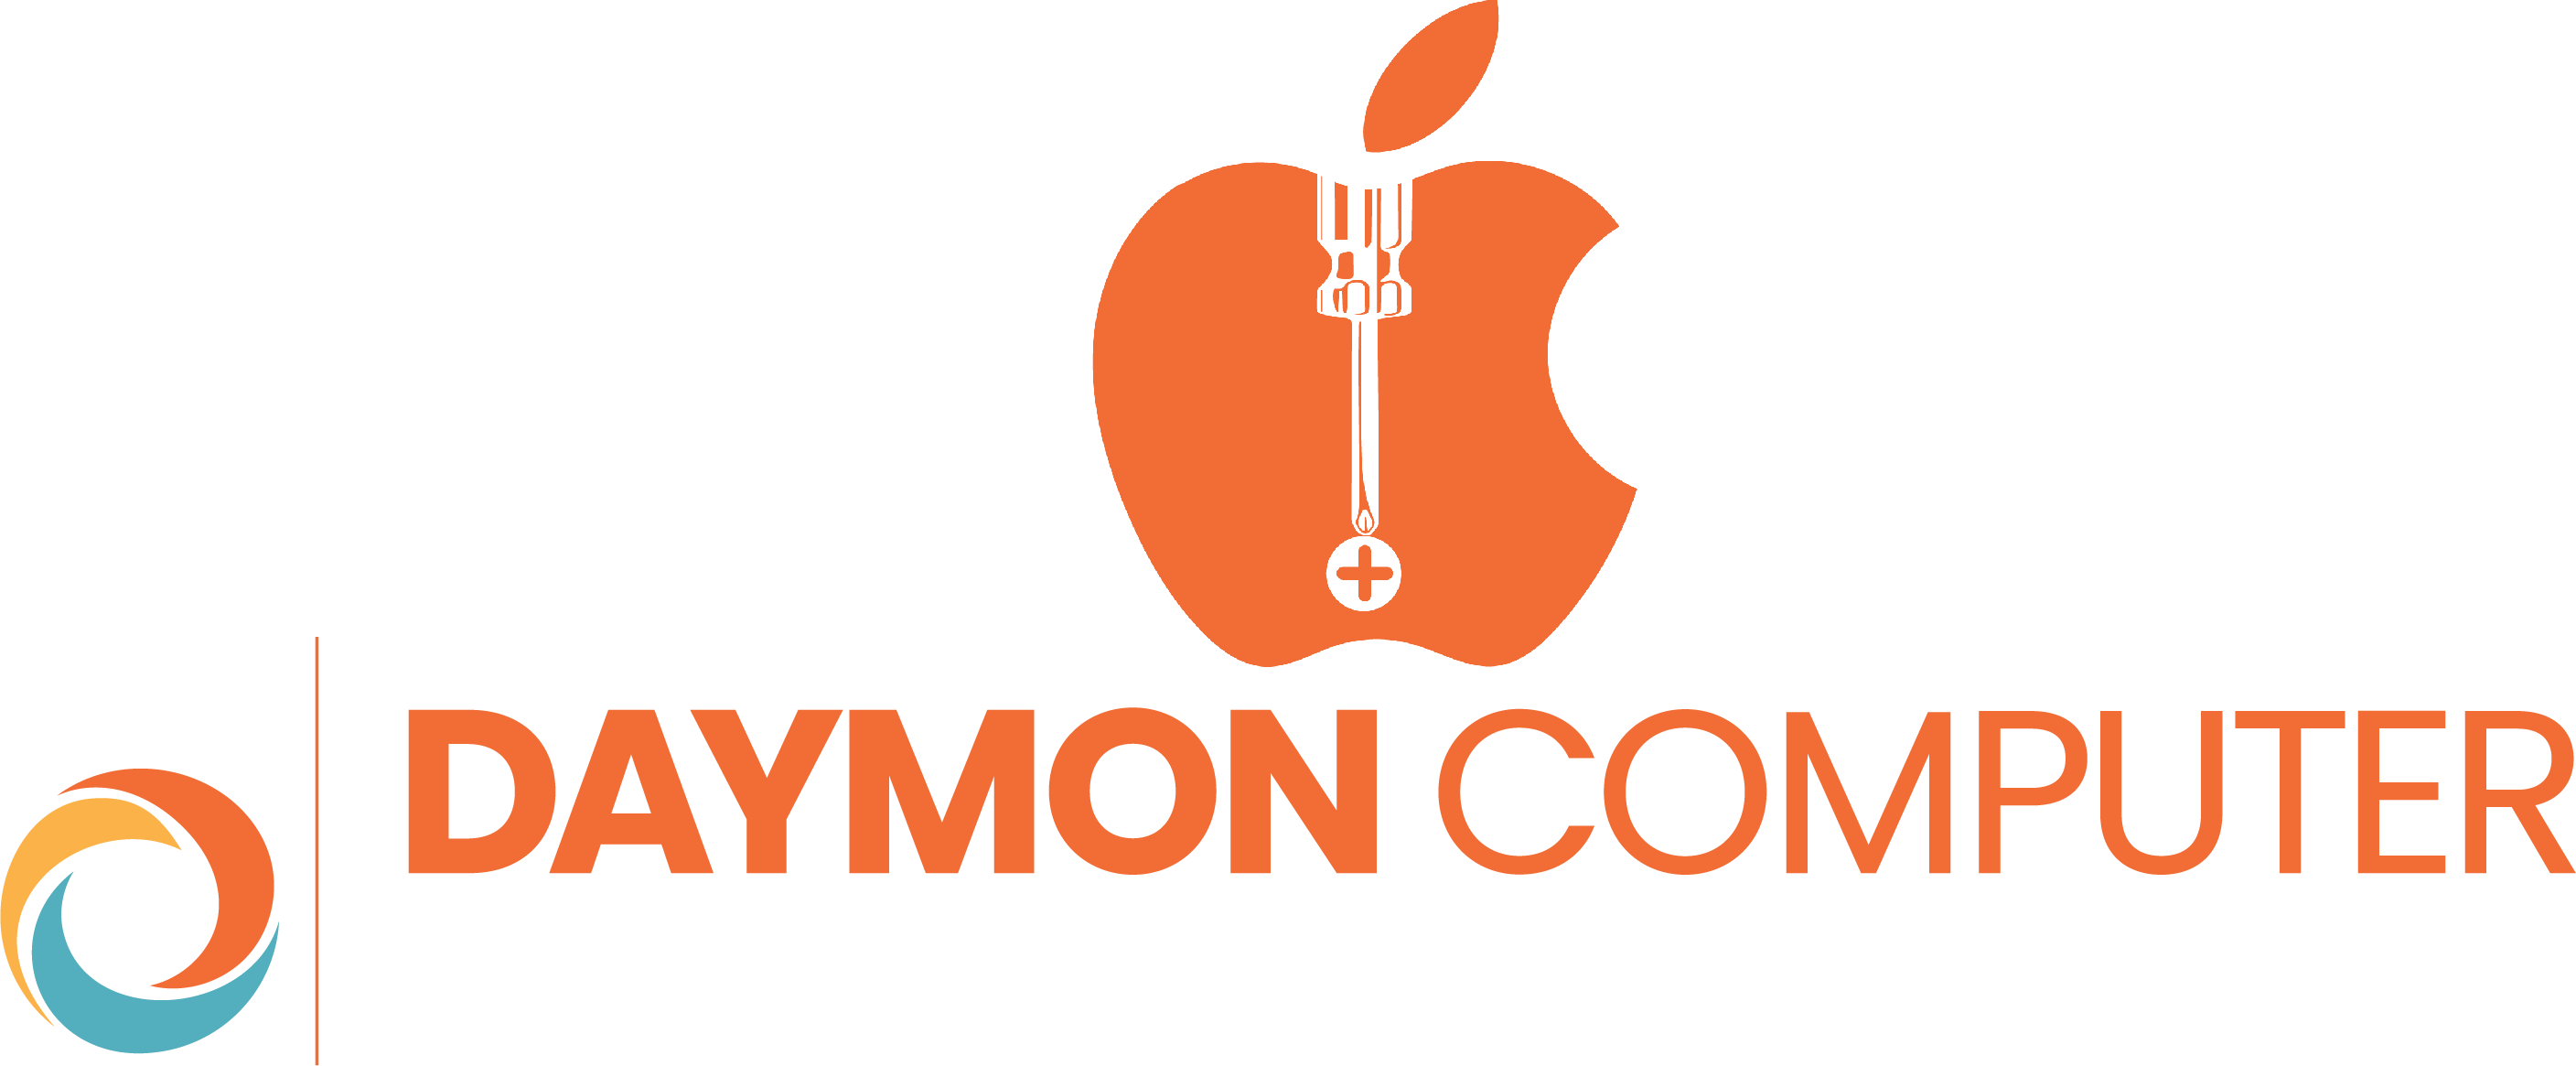 Daymon Computer - Best Apple MacBook Repair Services and Accessories Retailer - Dhaka,Bangladesh.